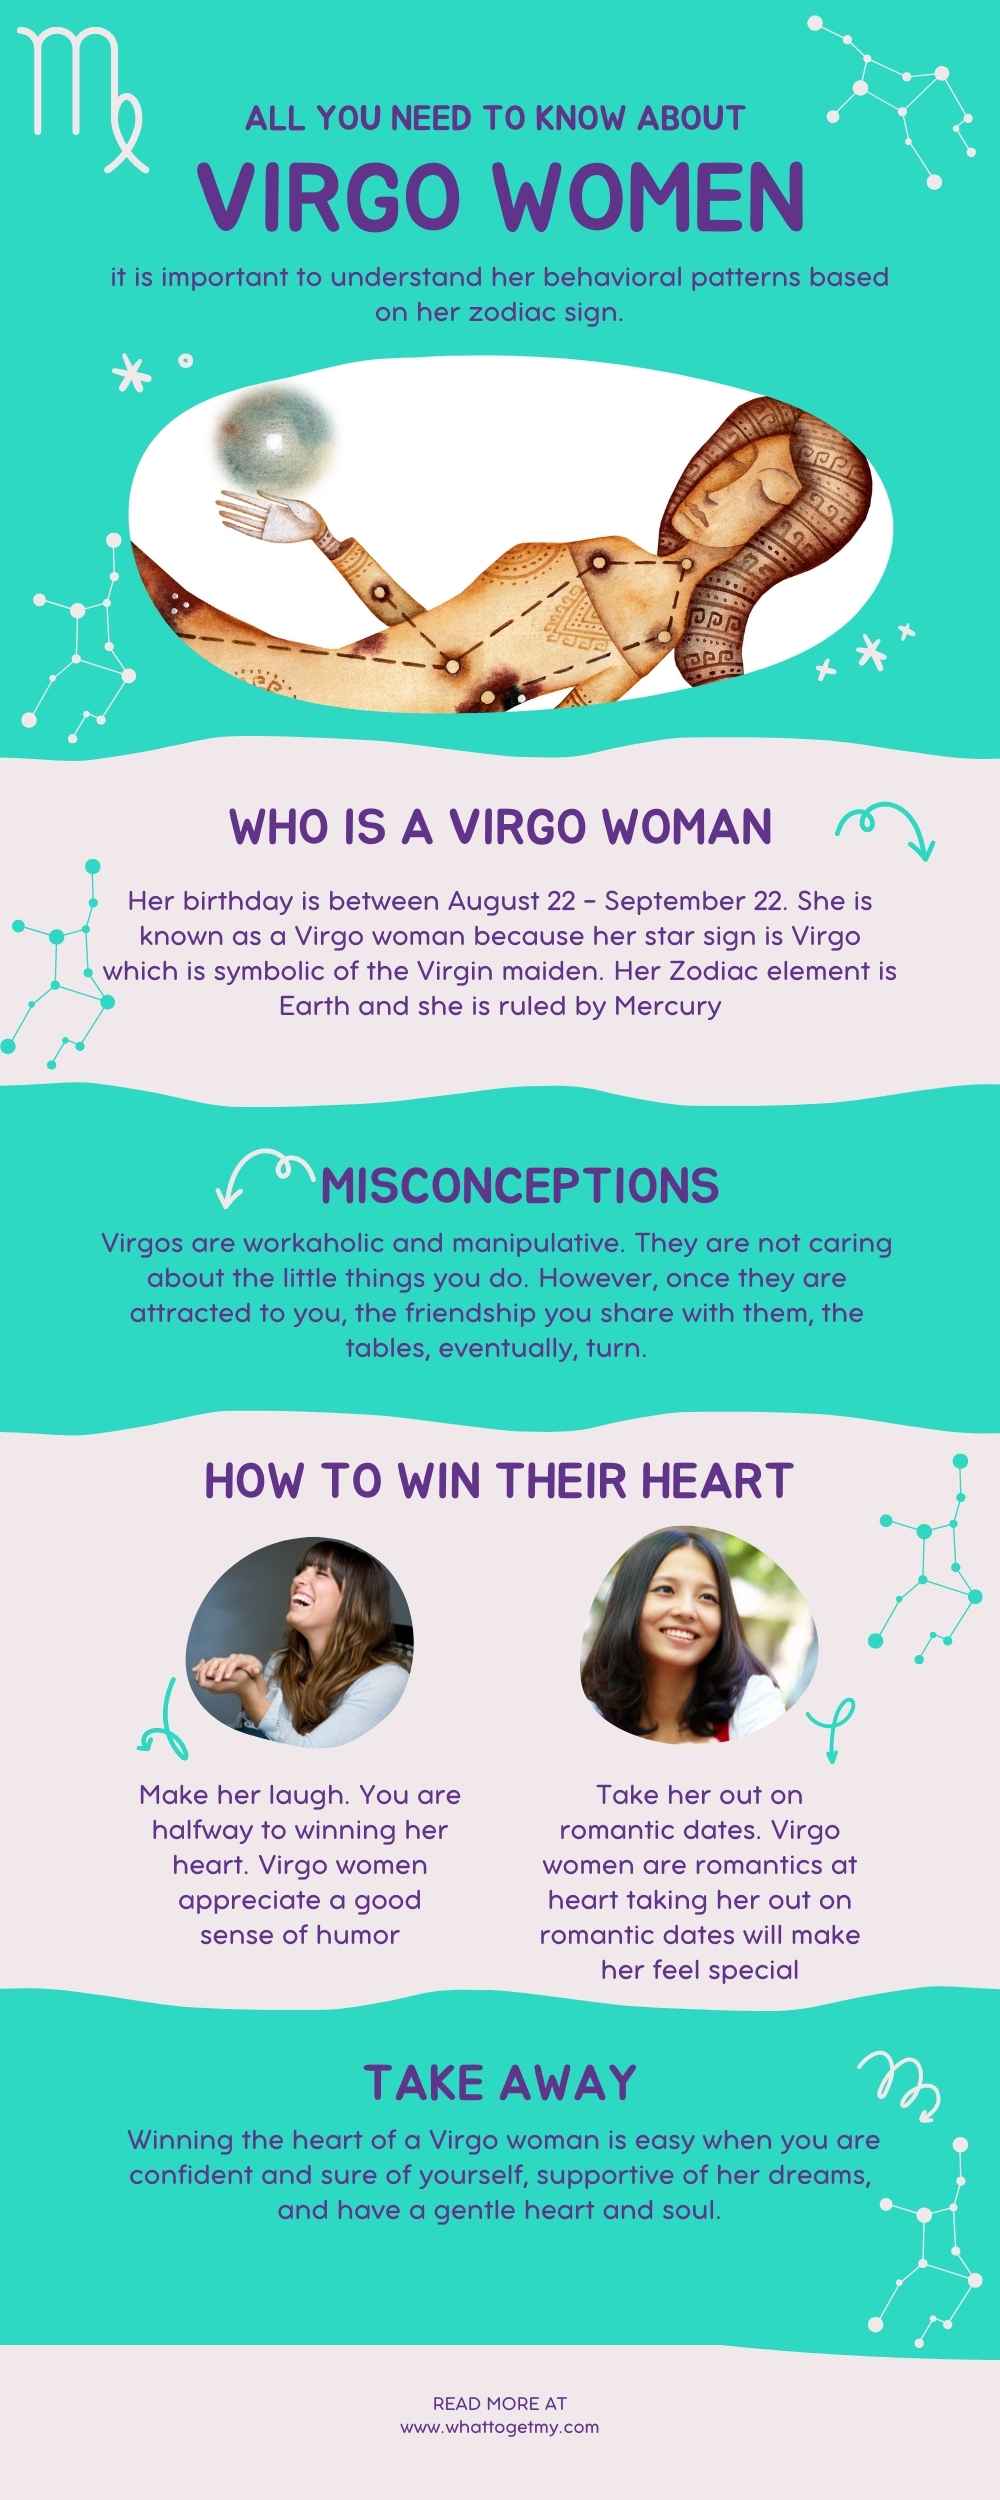 How to make a virgo woman jealous